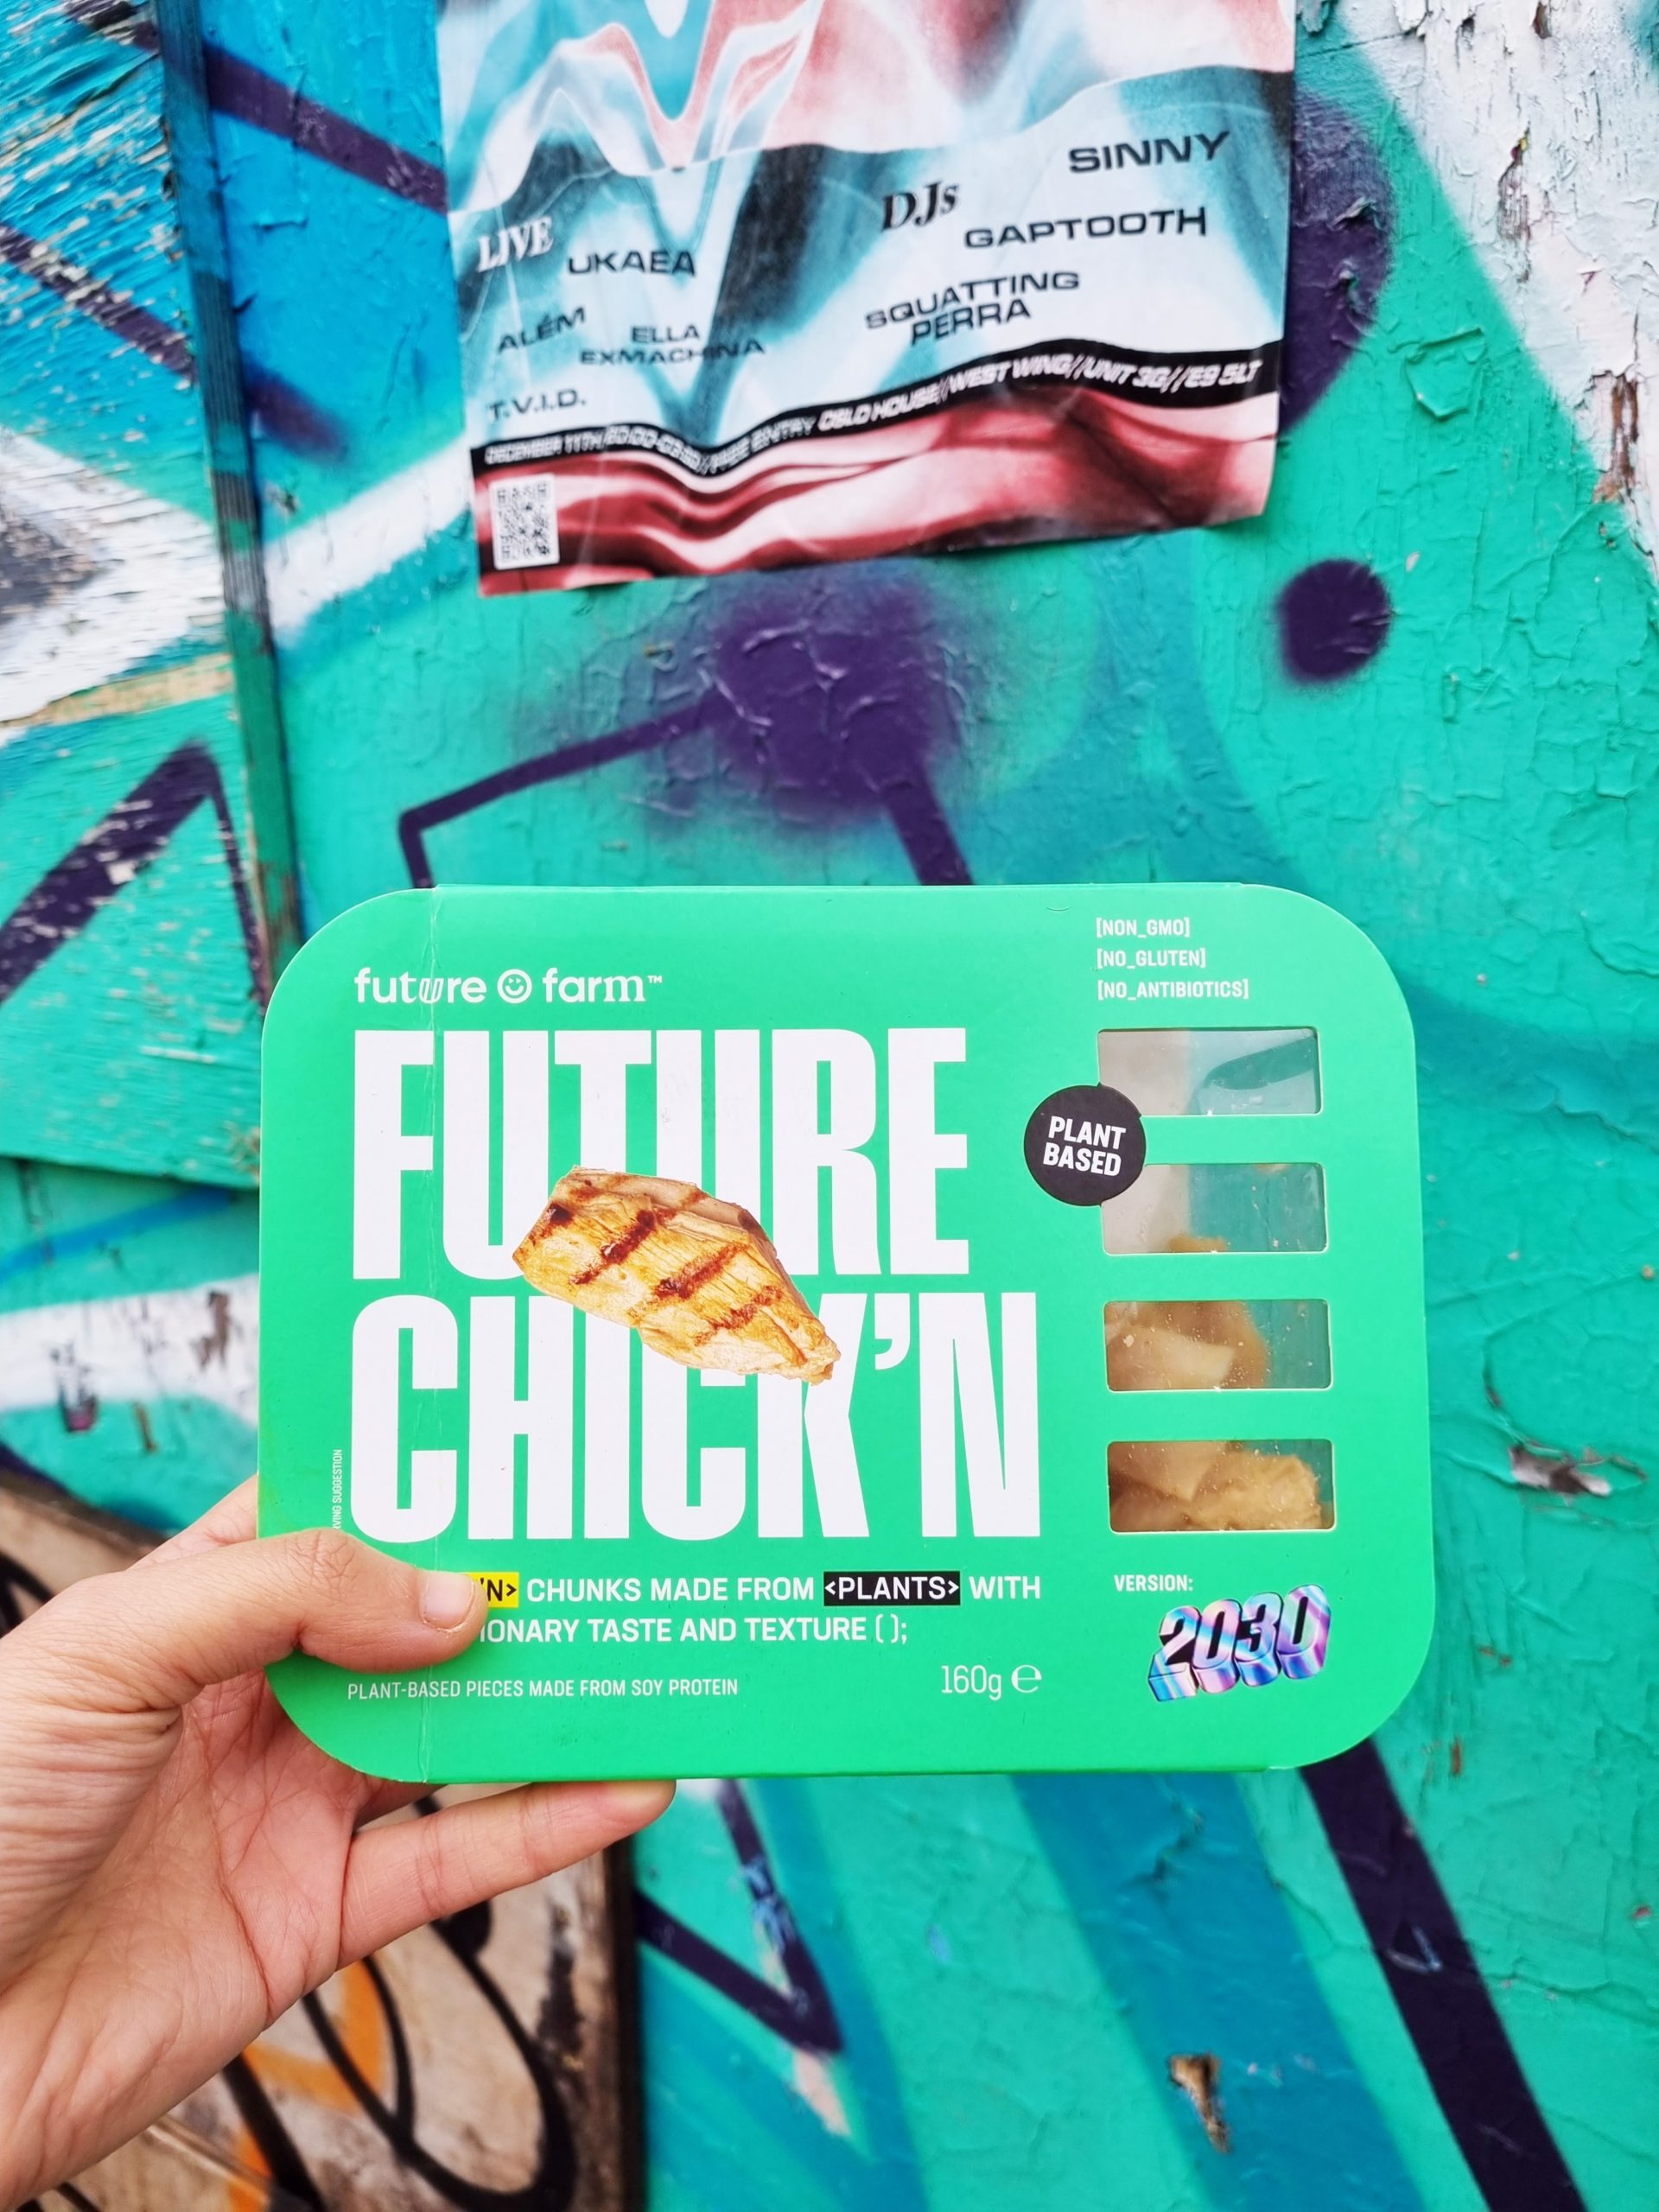 <img src="future.jpg" alt="future farm uk vegan chicken pieces"/> 